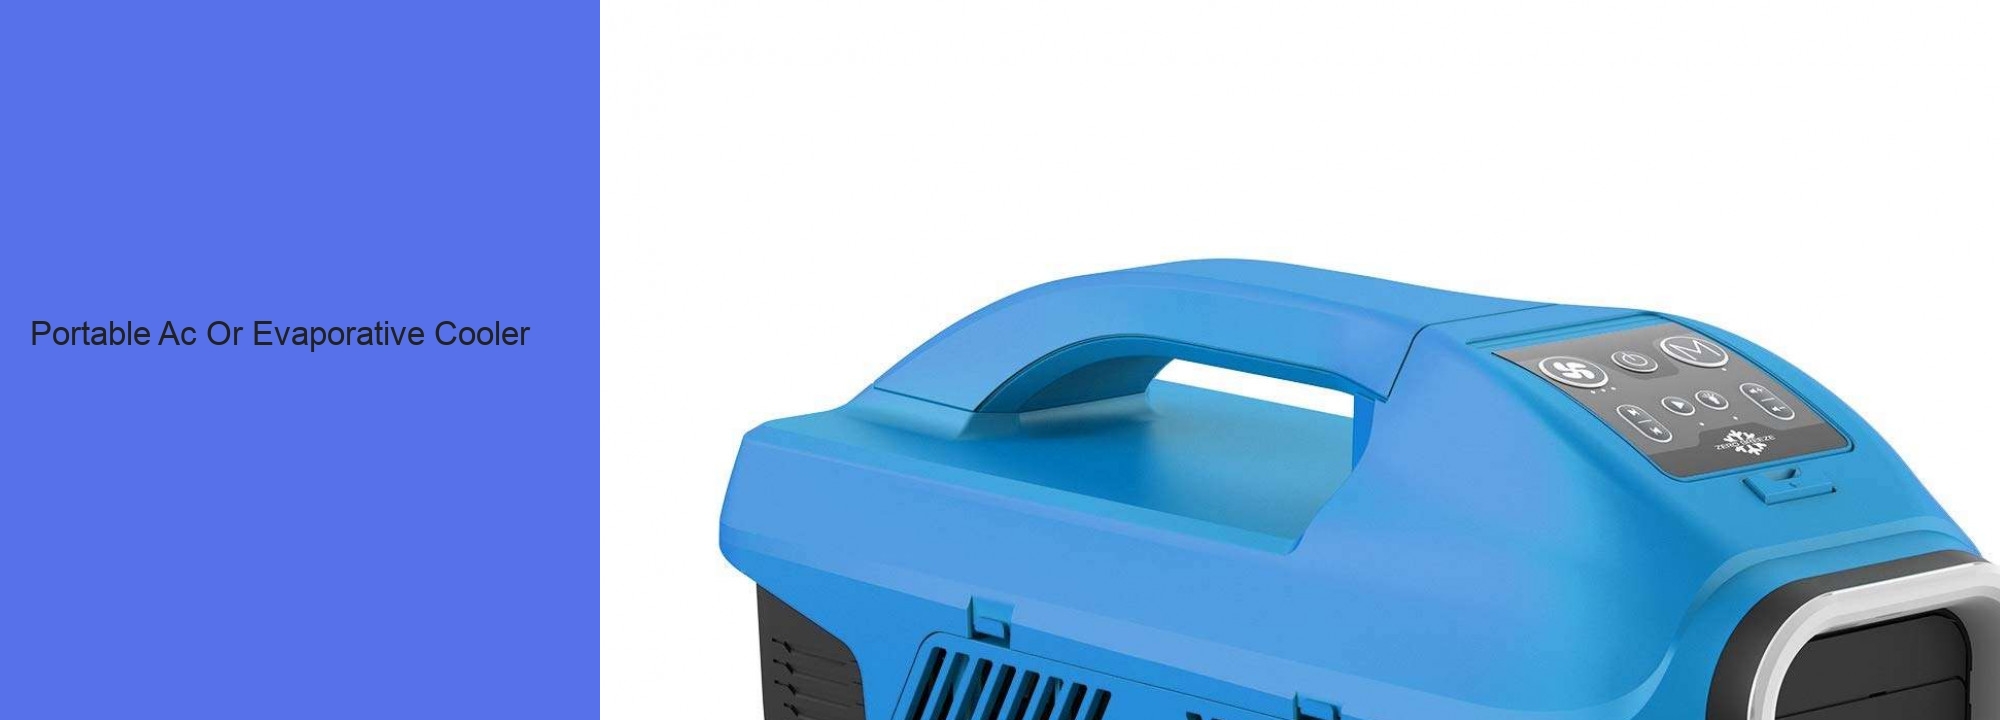 Portable Ac Or Evaporative Cooler